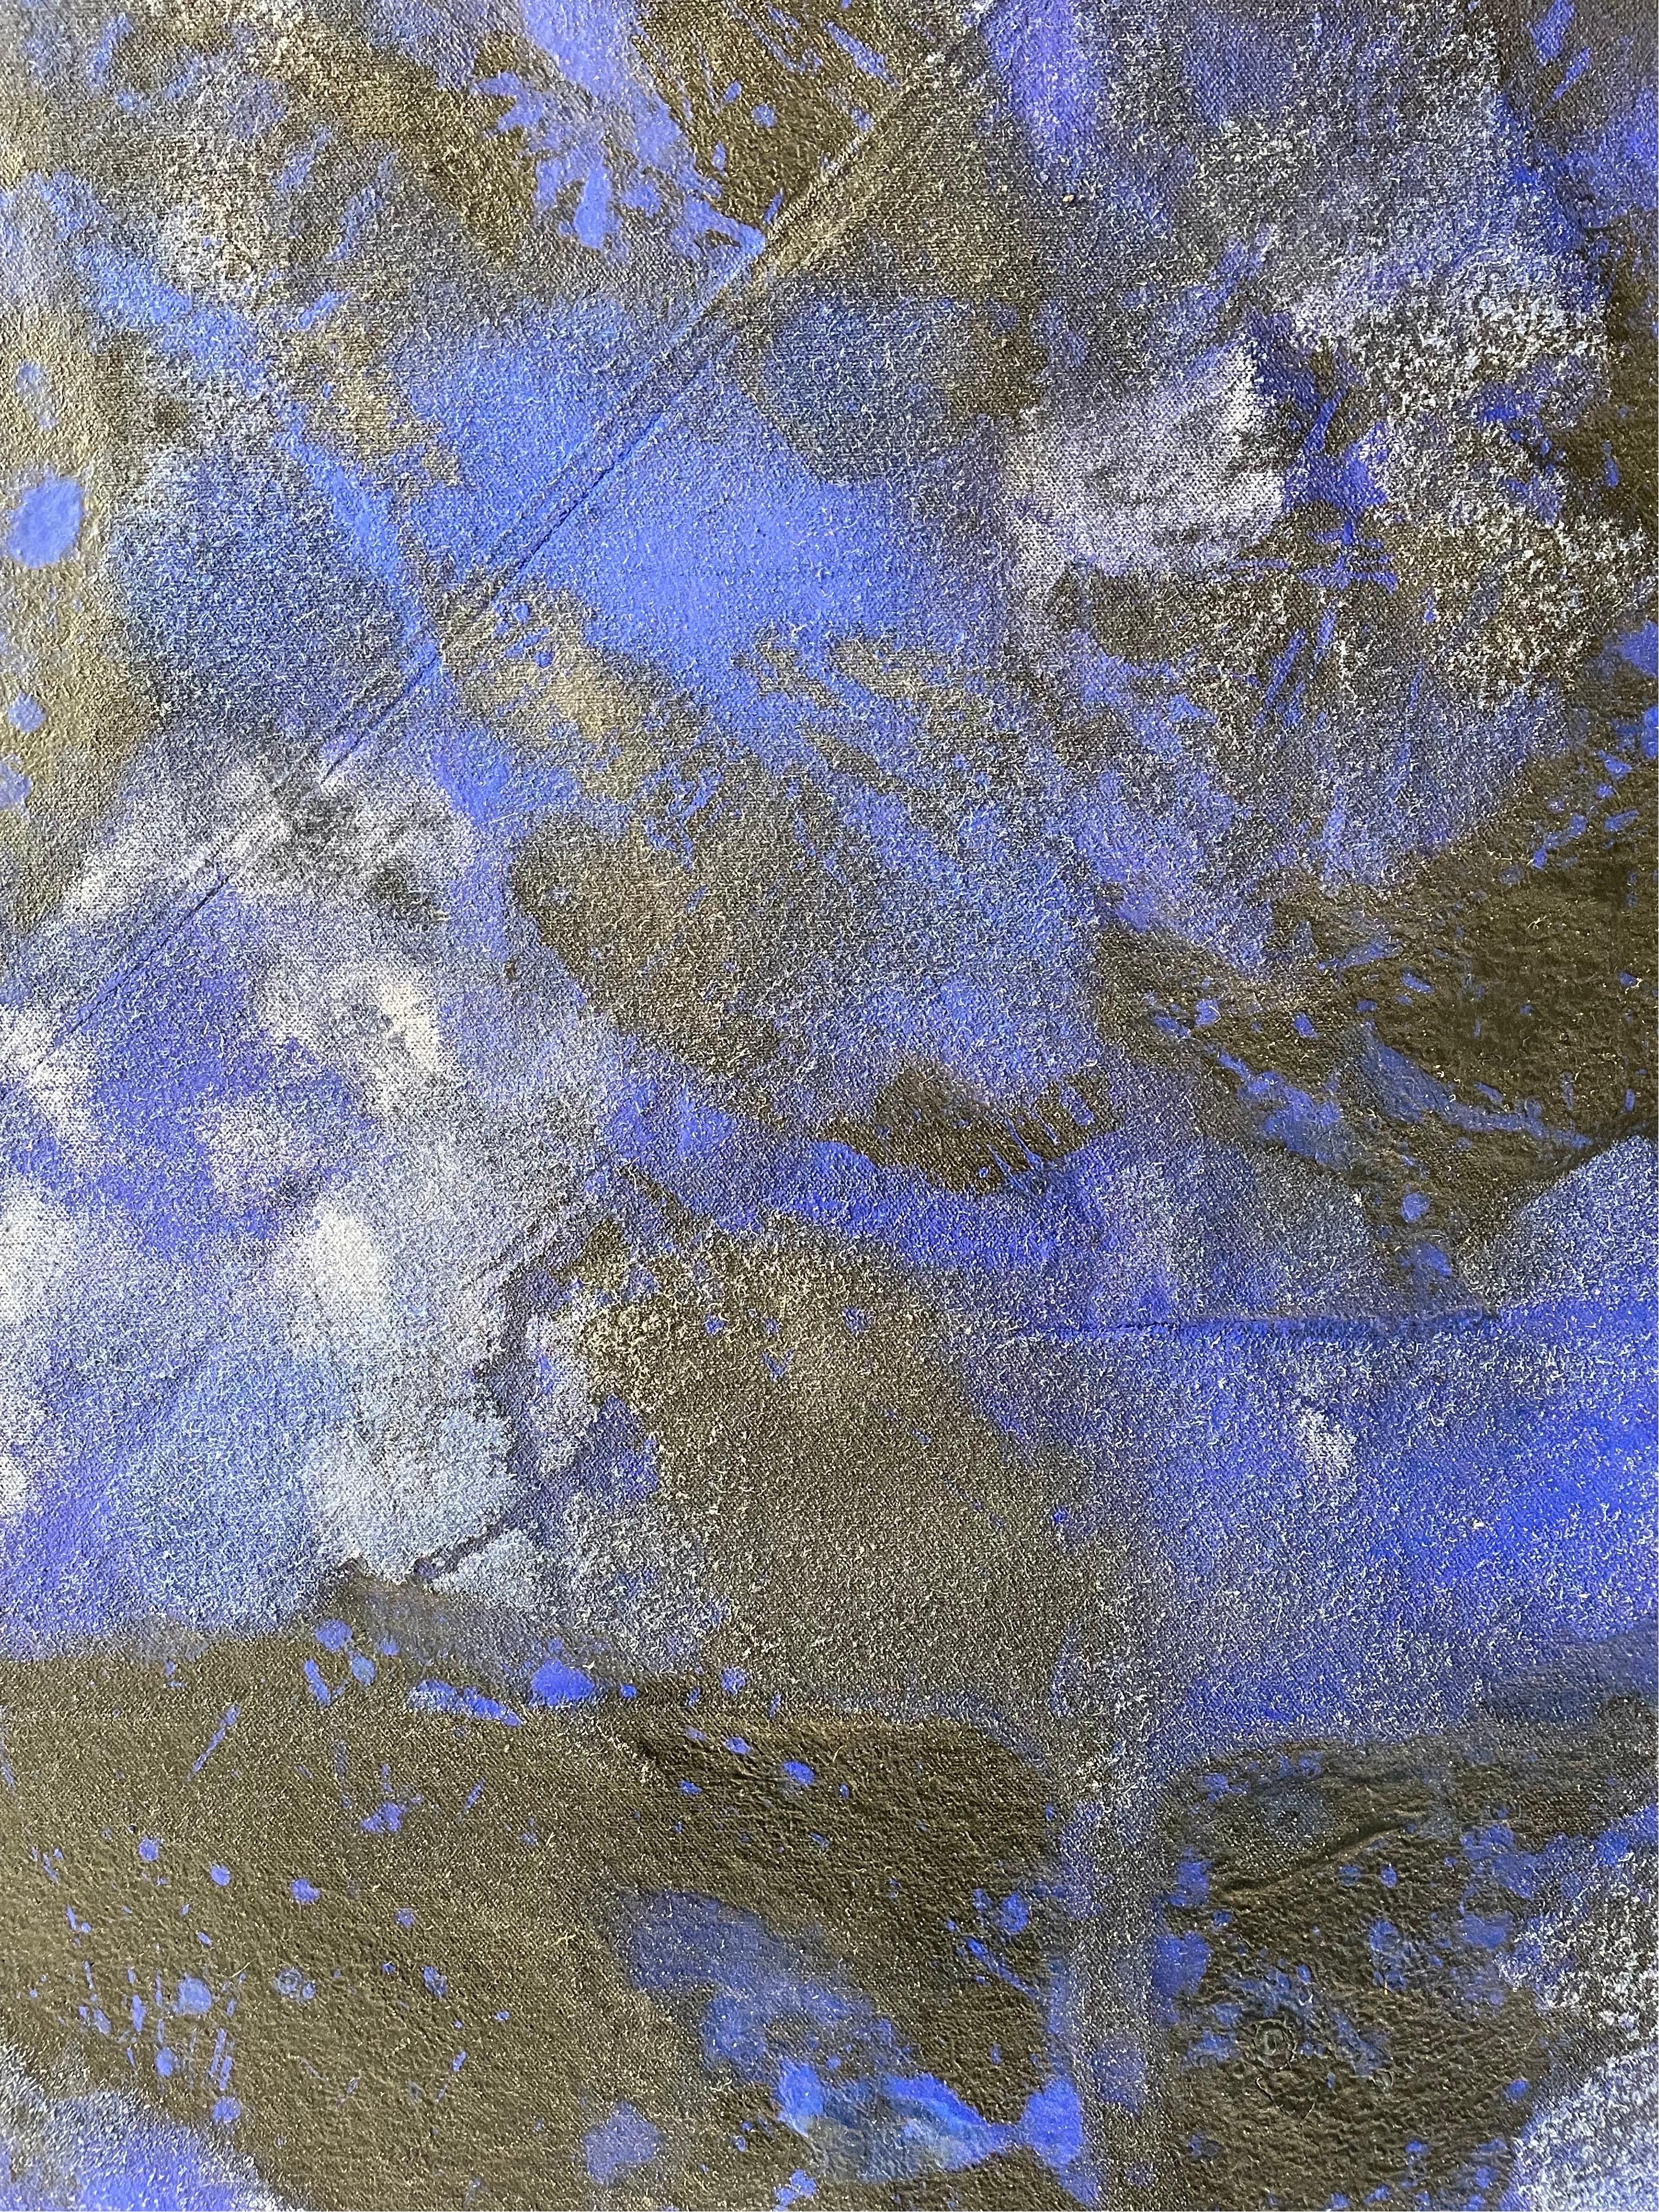 ABSTRACT Painting Texture Blue Contemporary Spanish Artist Iñaki Moreno 2022 2